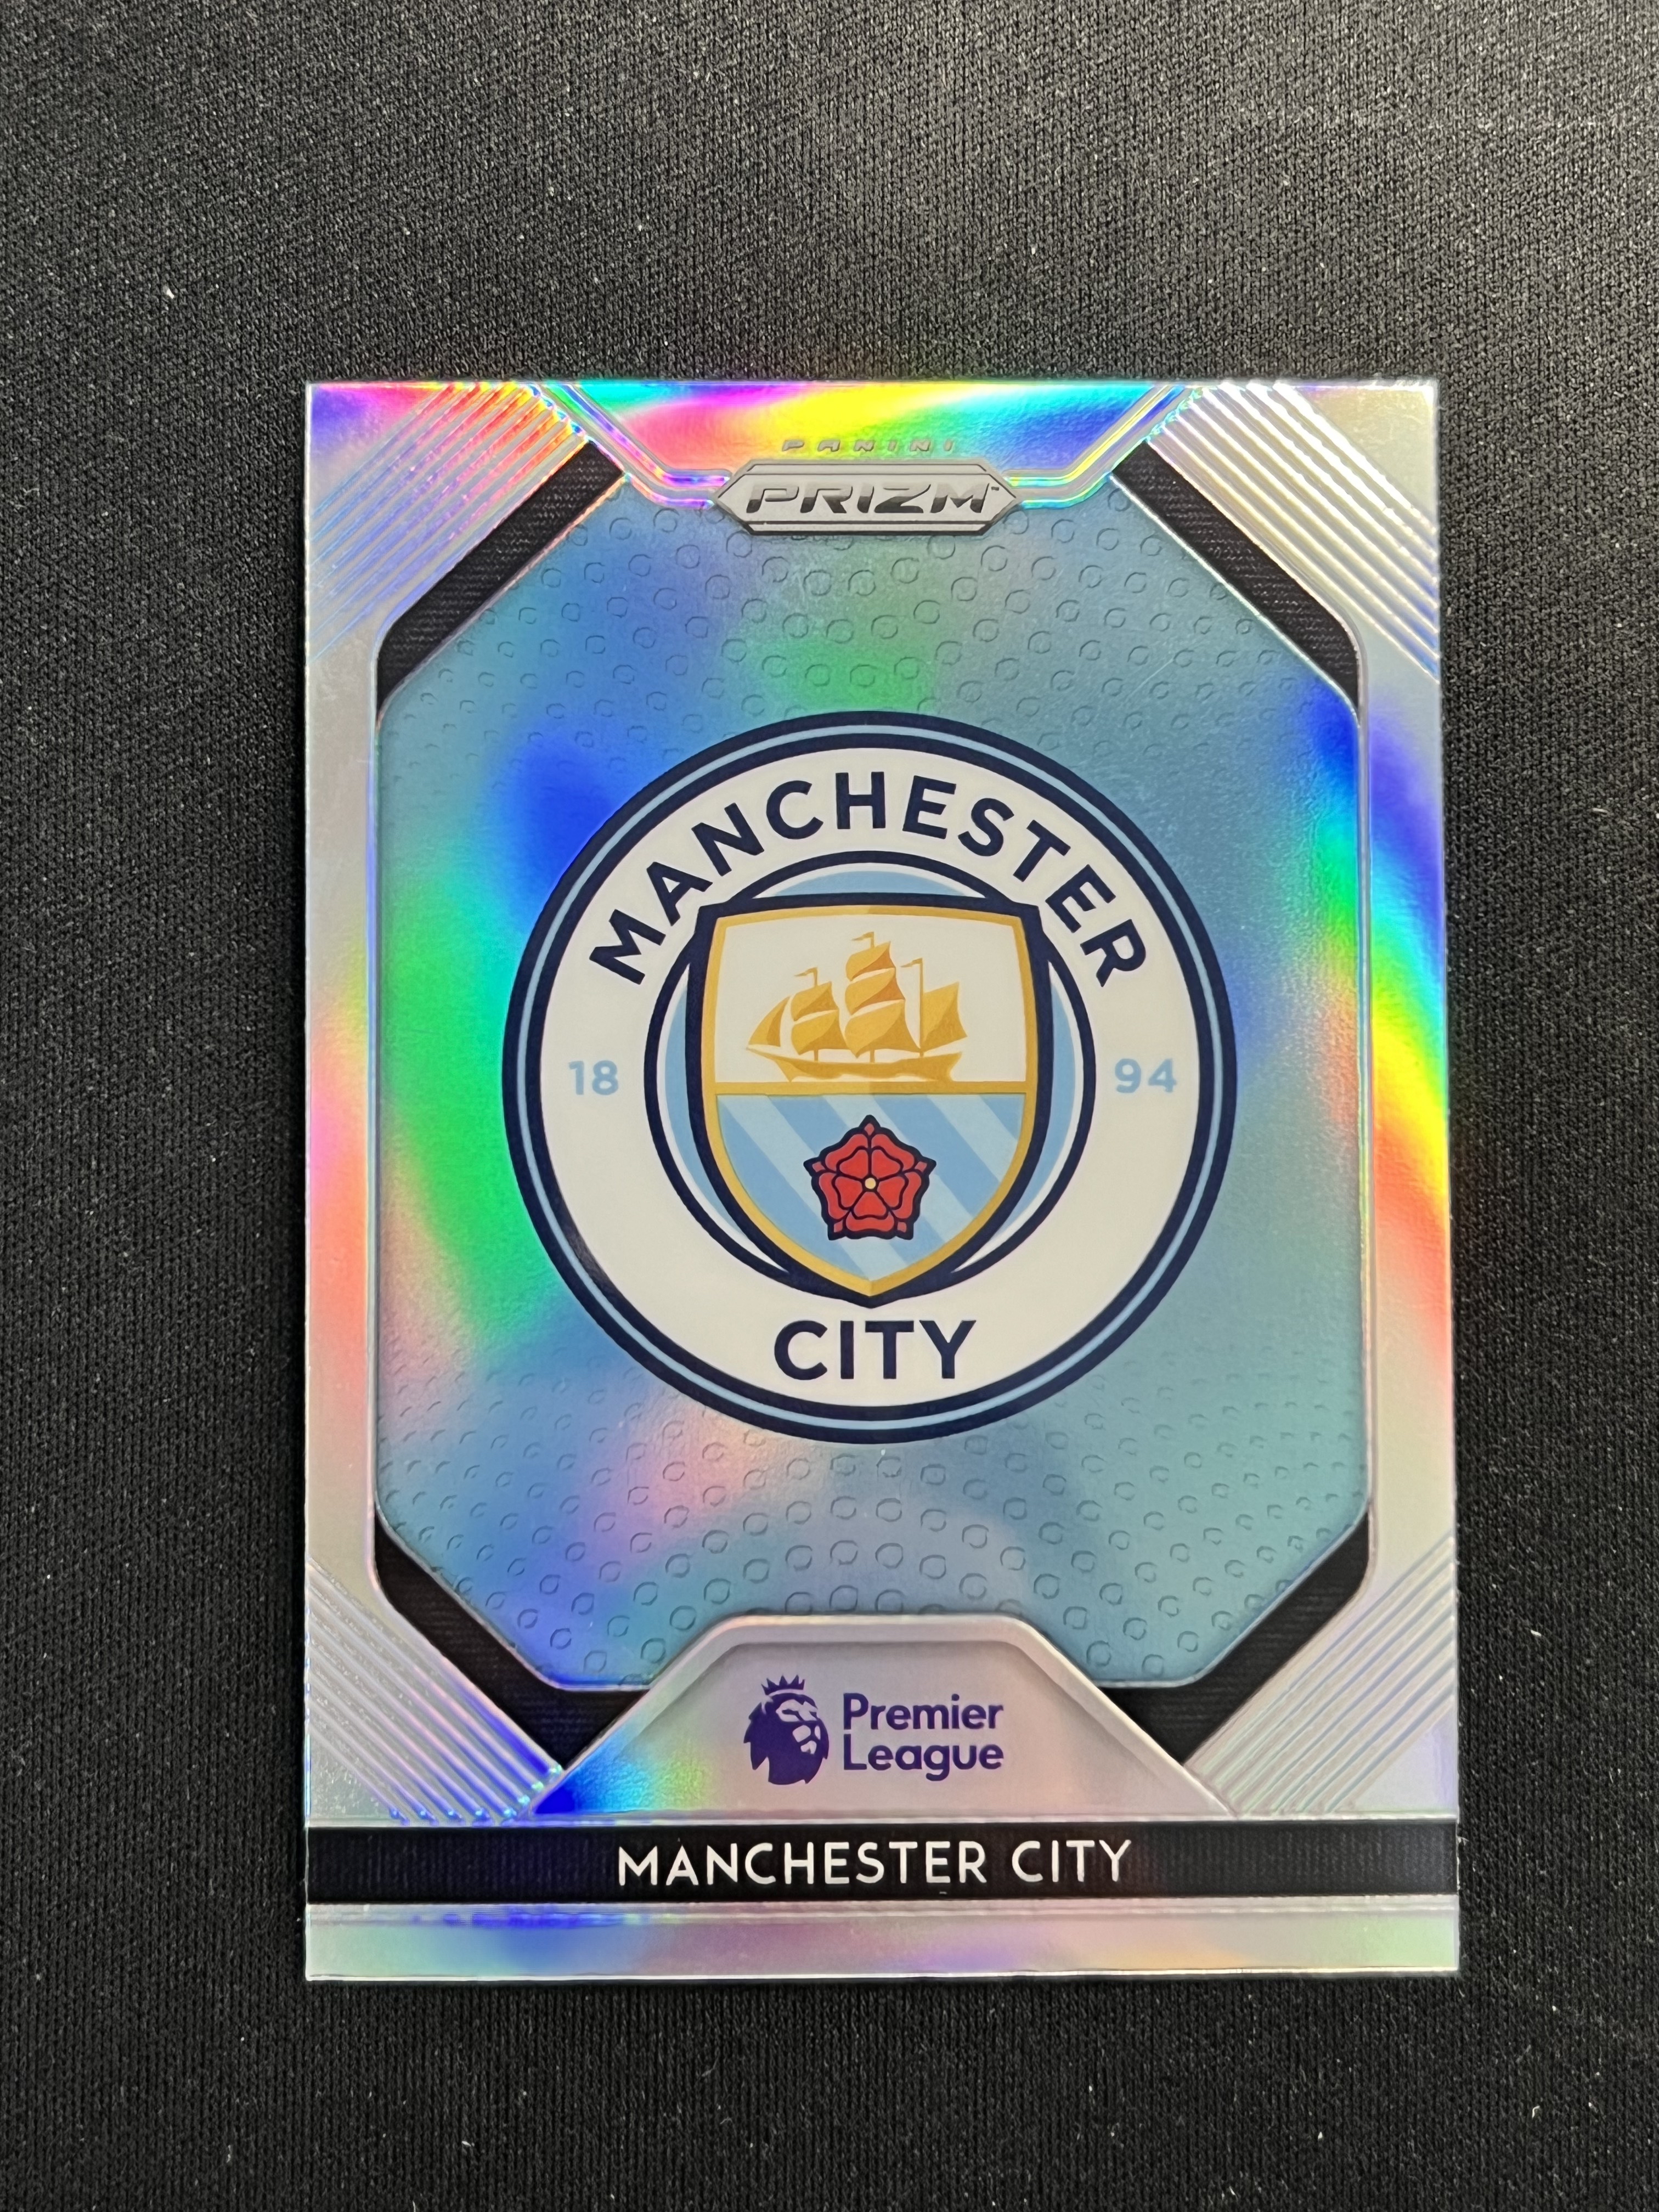 2019-20 Panini Prizm Manchester City 英超pz 曼城队徽 银折。绰号蓝月亮，hit之一。黑哥主队，德布劳内、哈兰德、孔帕尼、阿圭罗【珞珈拍卖】